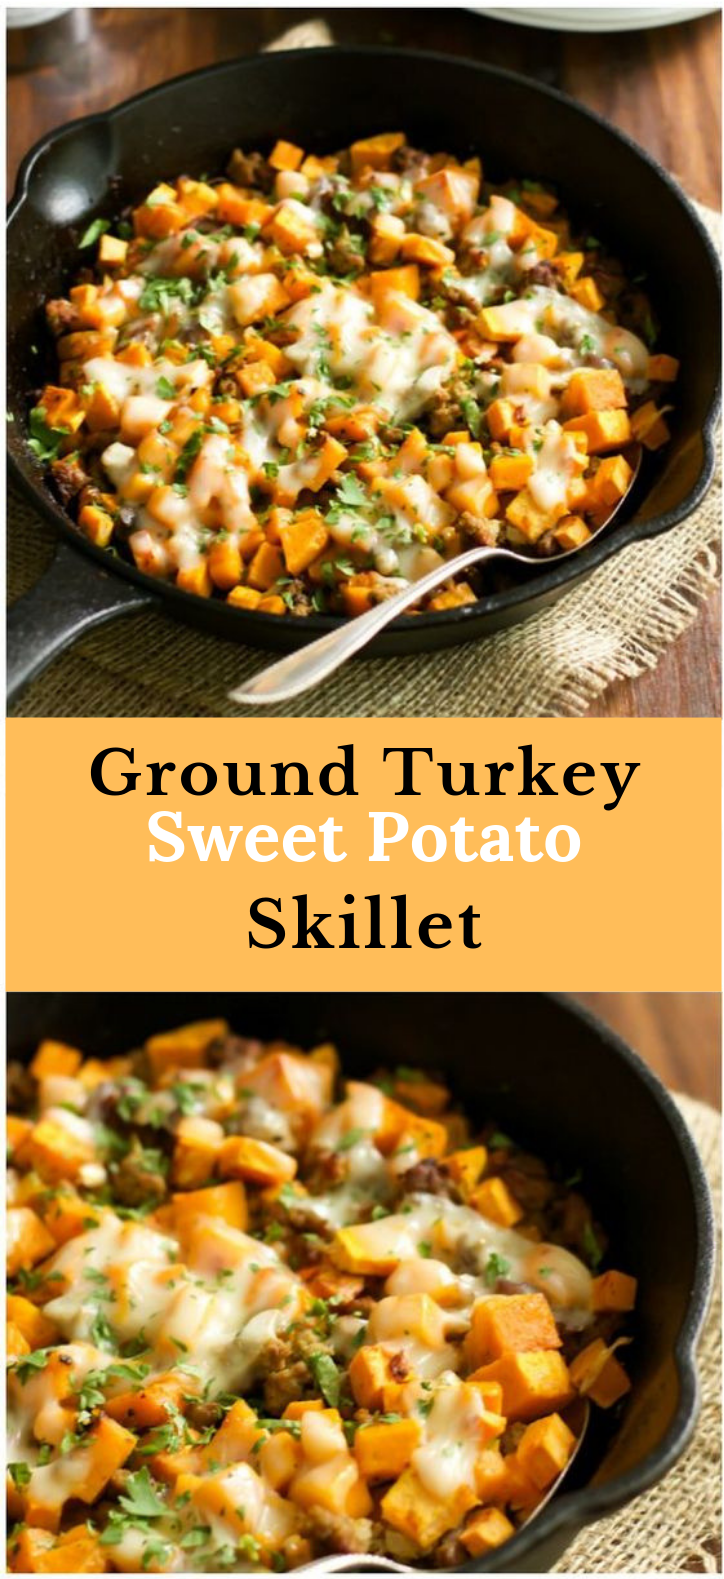 Ground Turkey Sweet Potato Skillet Recipe #Skillet #Healthy